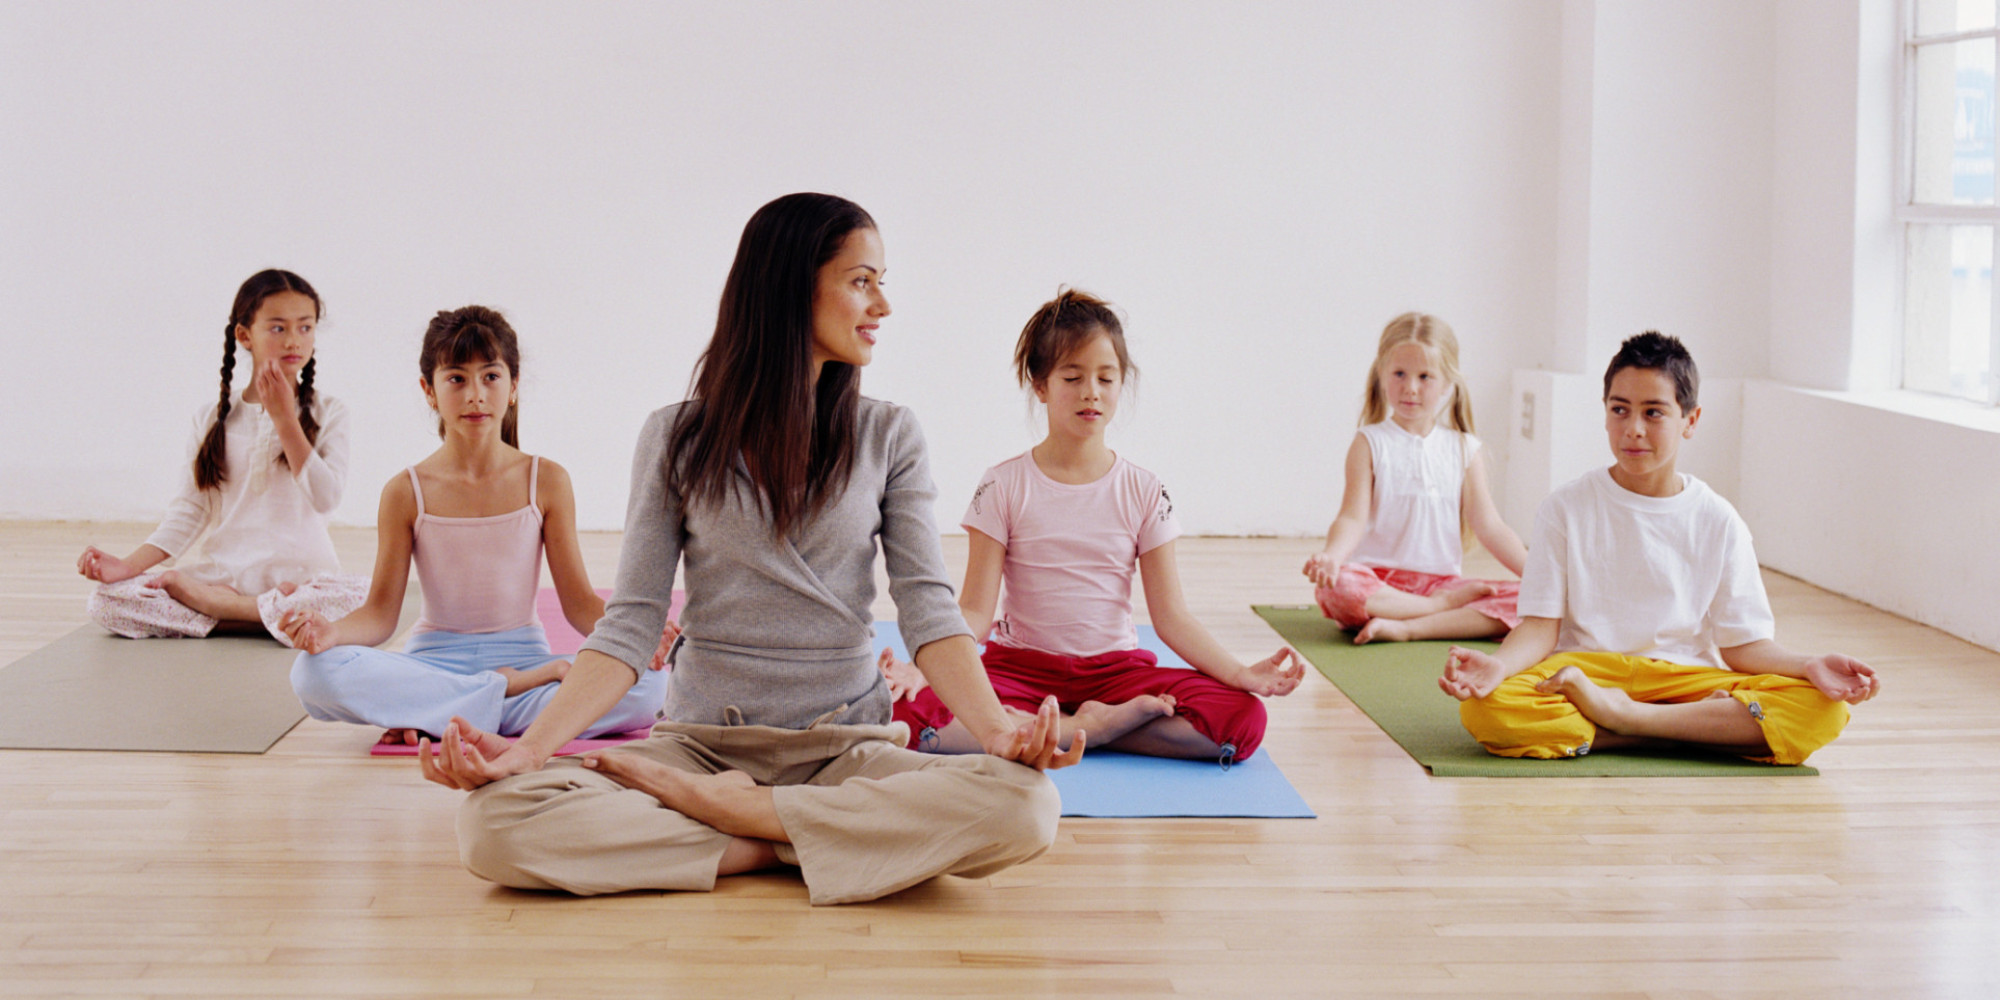 Woman teaching children (7-10) yoga